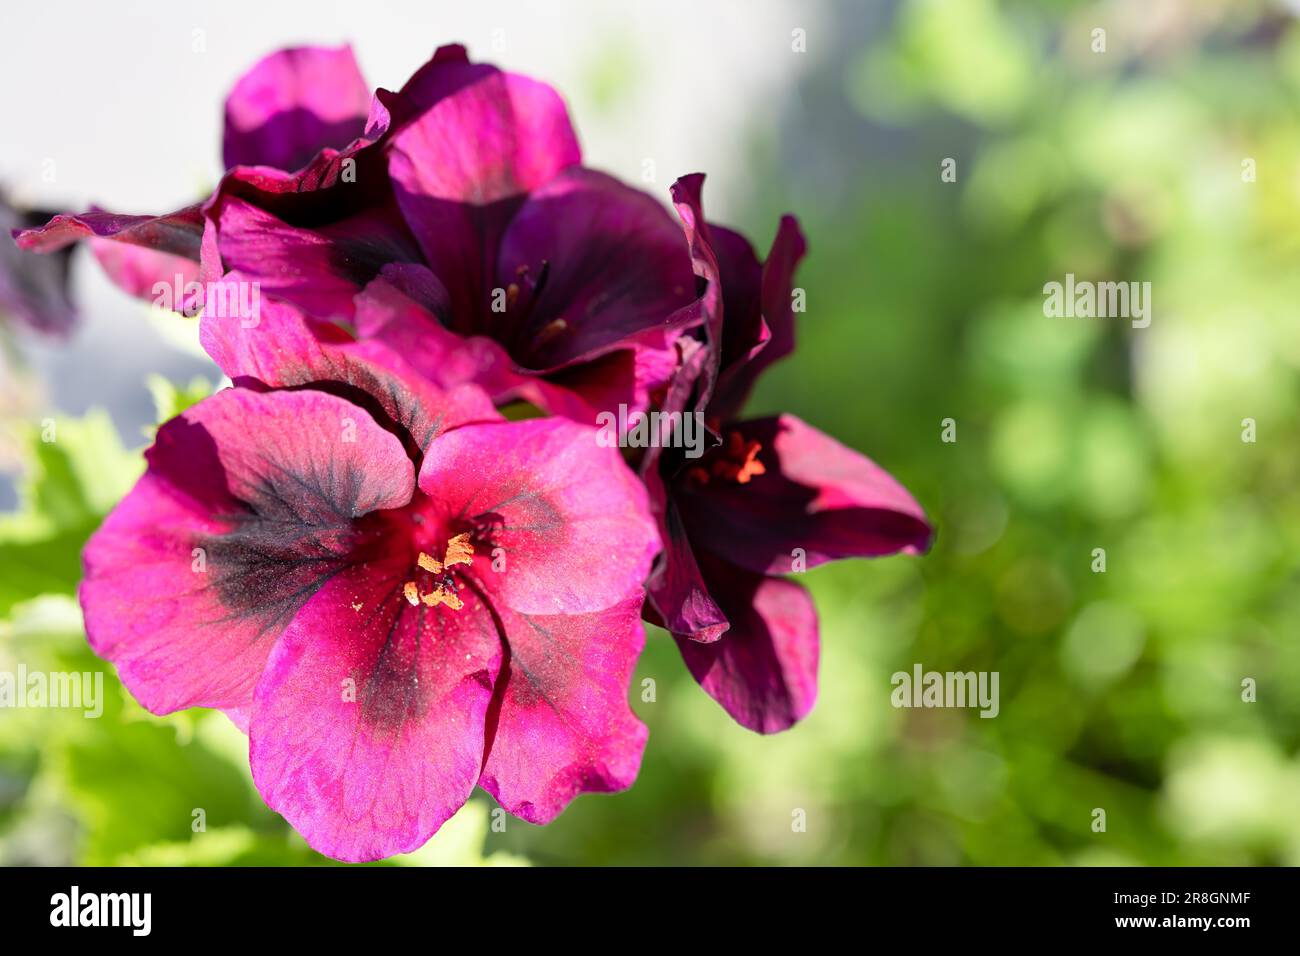 Ivy geranium pelorgonium close-up. Pink red flowers. Stock Photo